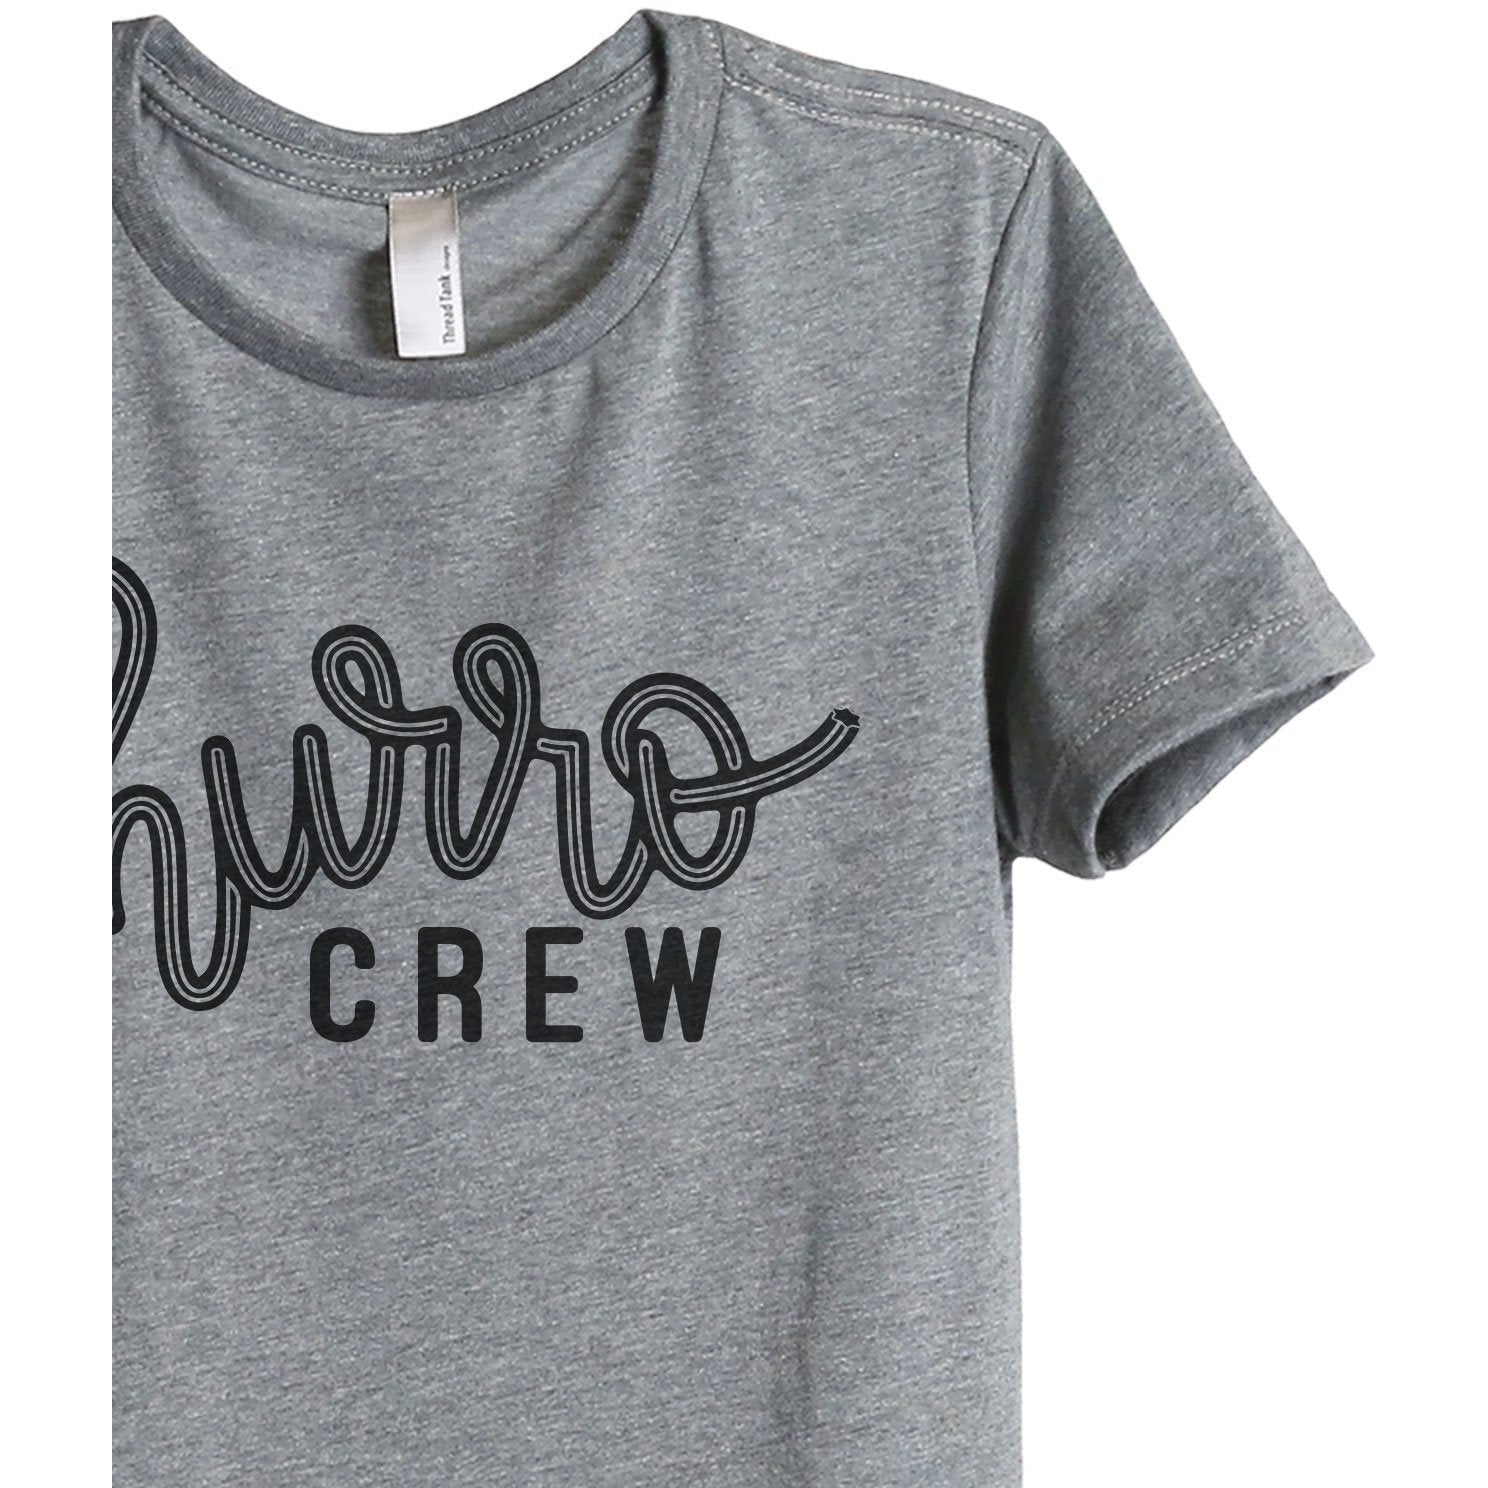 Churro Crew Women's Relaxed Crewneck T-Shirt Top Tee Heather Grey